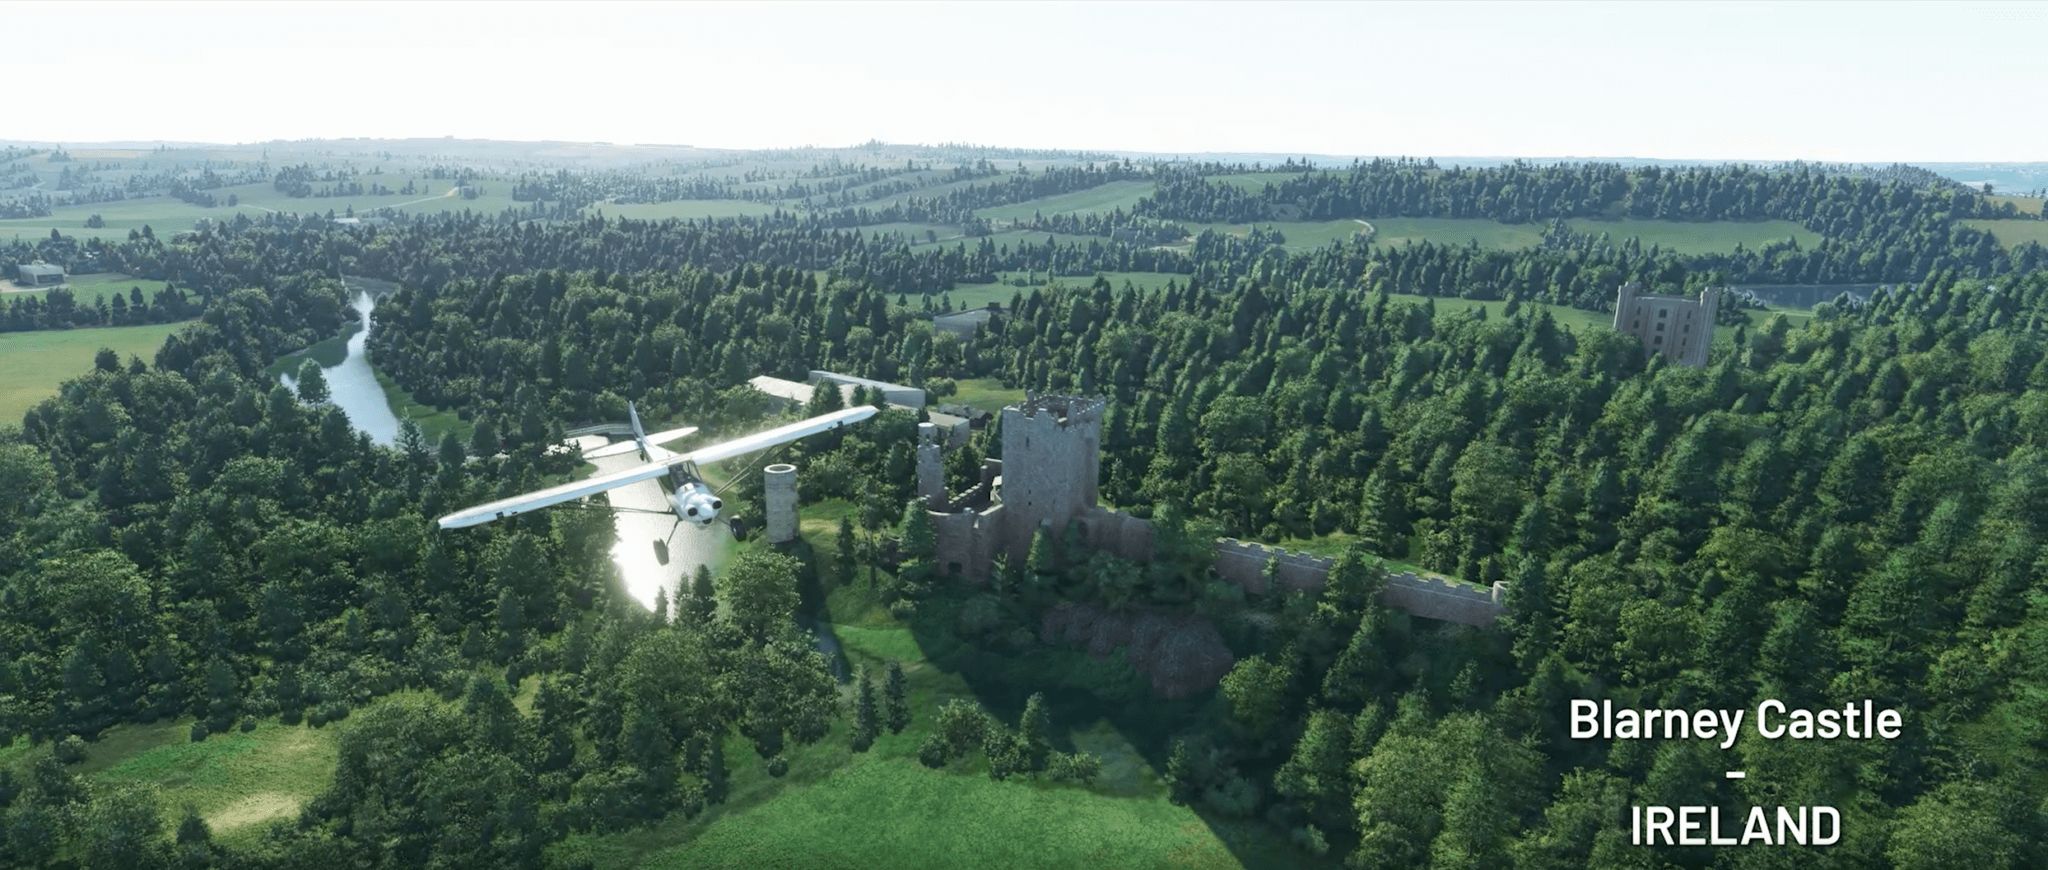 Ireland's Blarney Castle added to Microsoft Flight Simulator